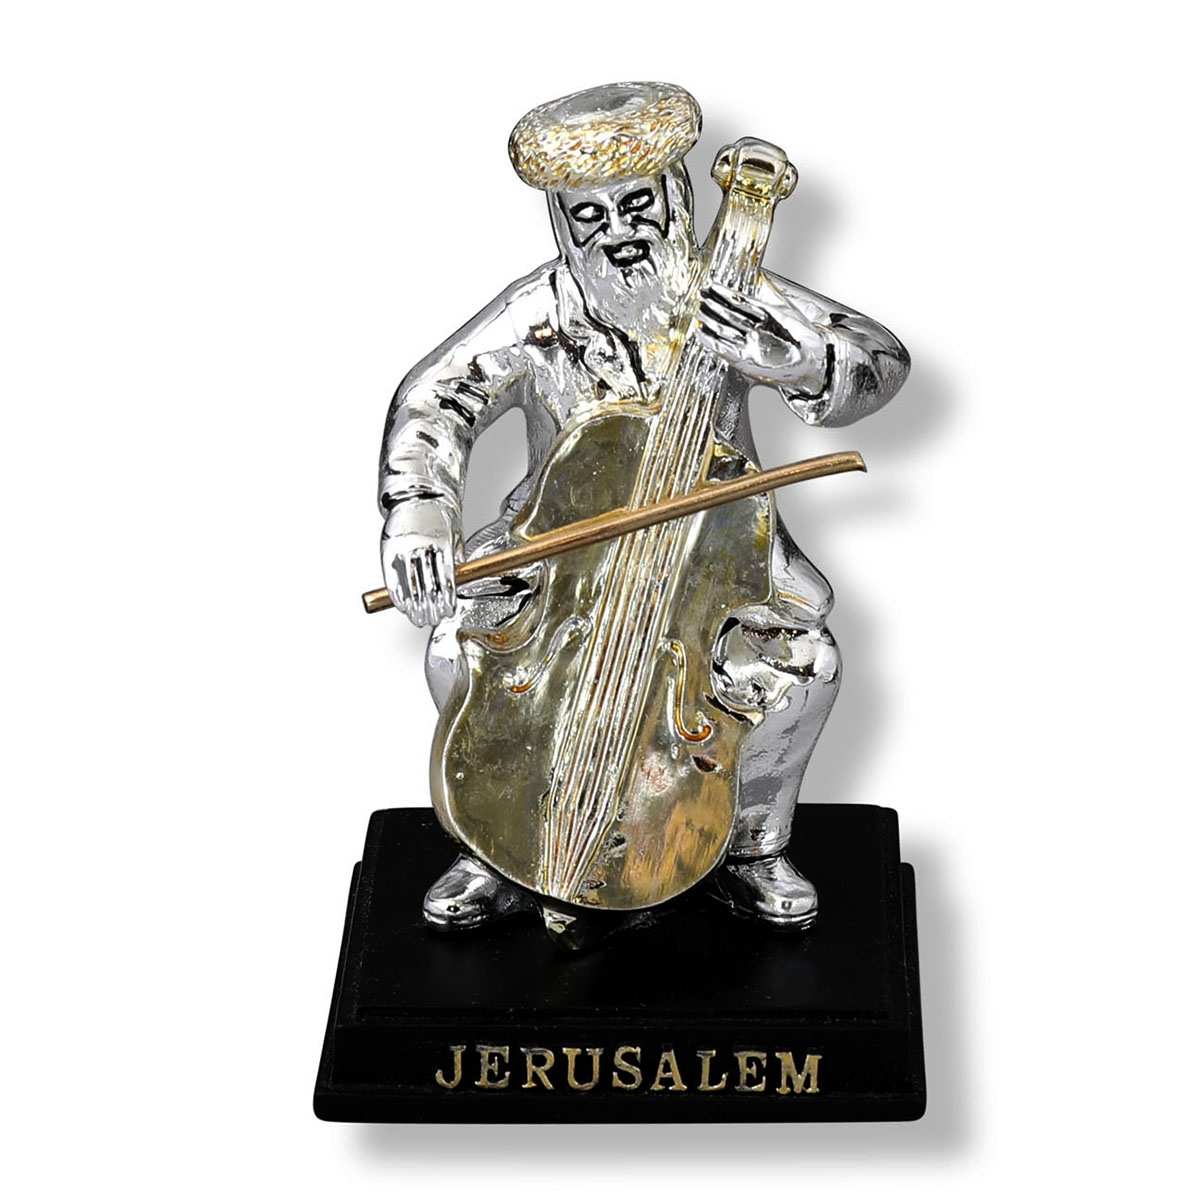 Jerusalem Hassidic Silver-Plated Cello Figurine - 1